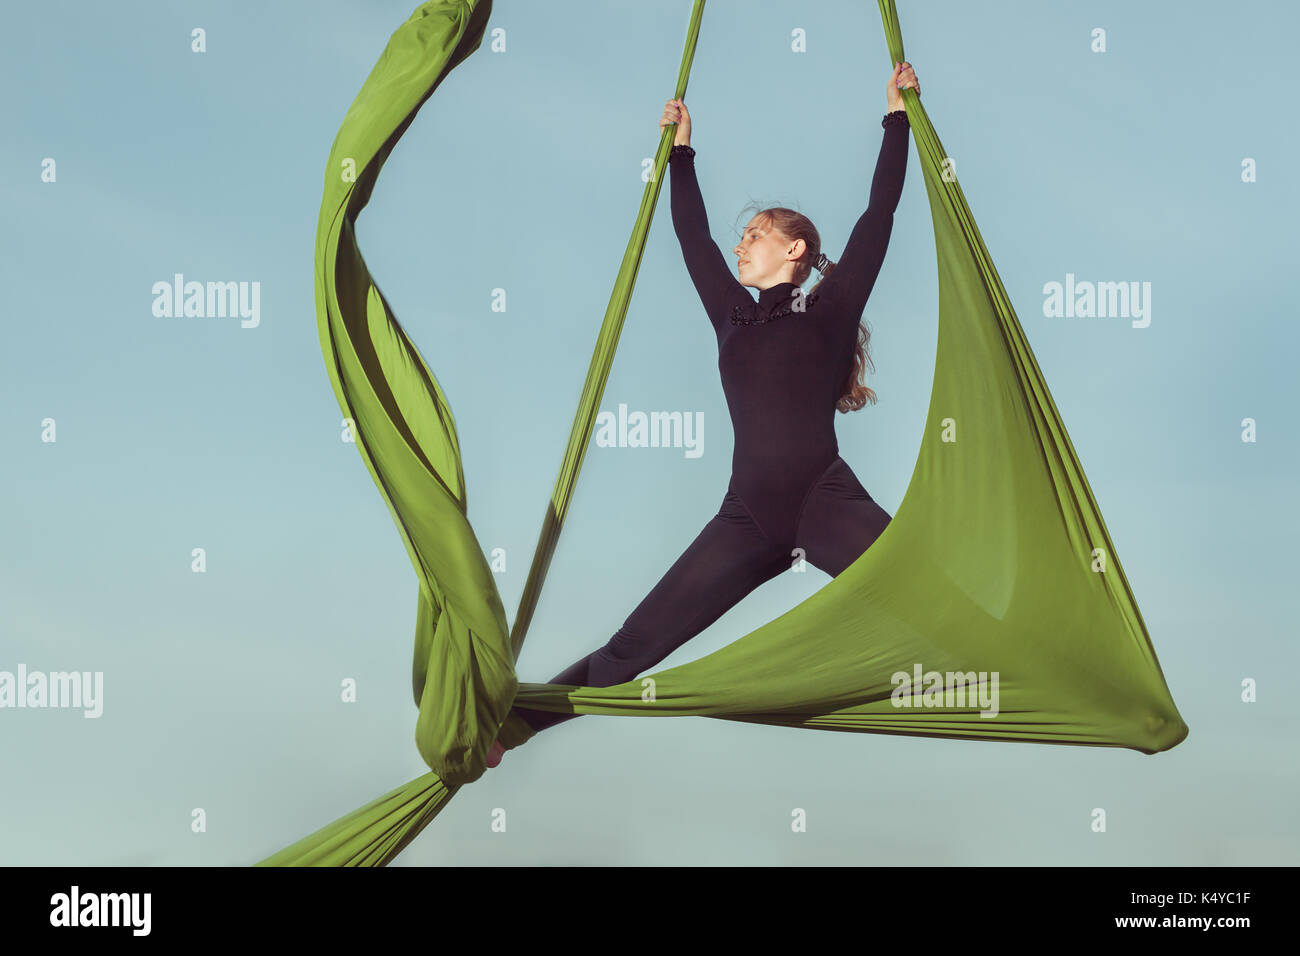 Sporting tricks on a hammock, woman aerial acrobat. Stock Photo